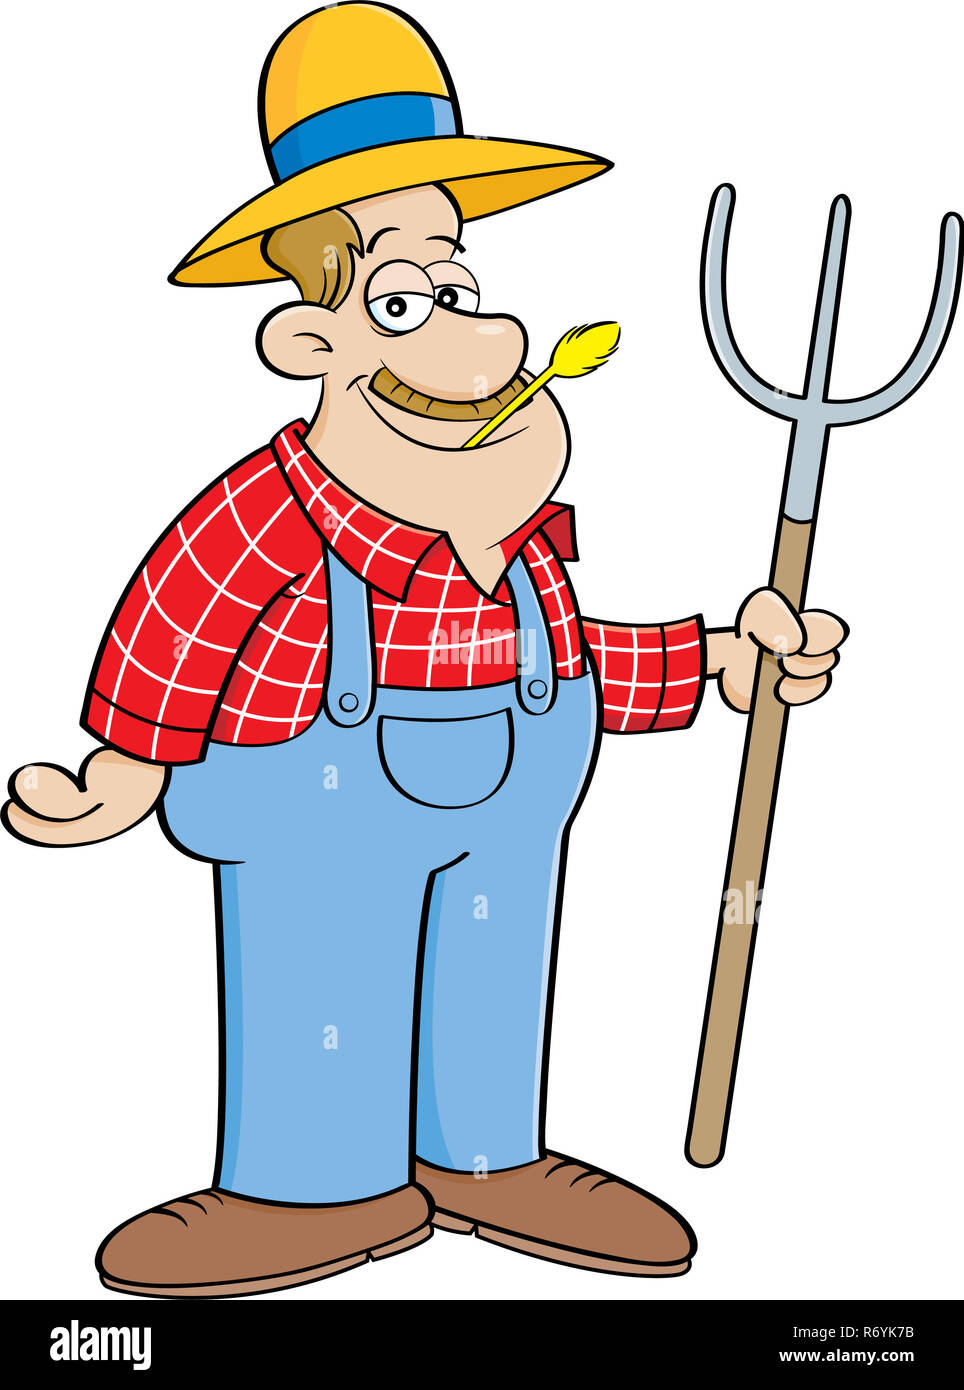 Cartoon illustration of a farmer holding a pitchfork. Stock Photo